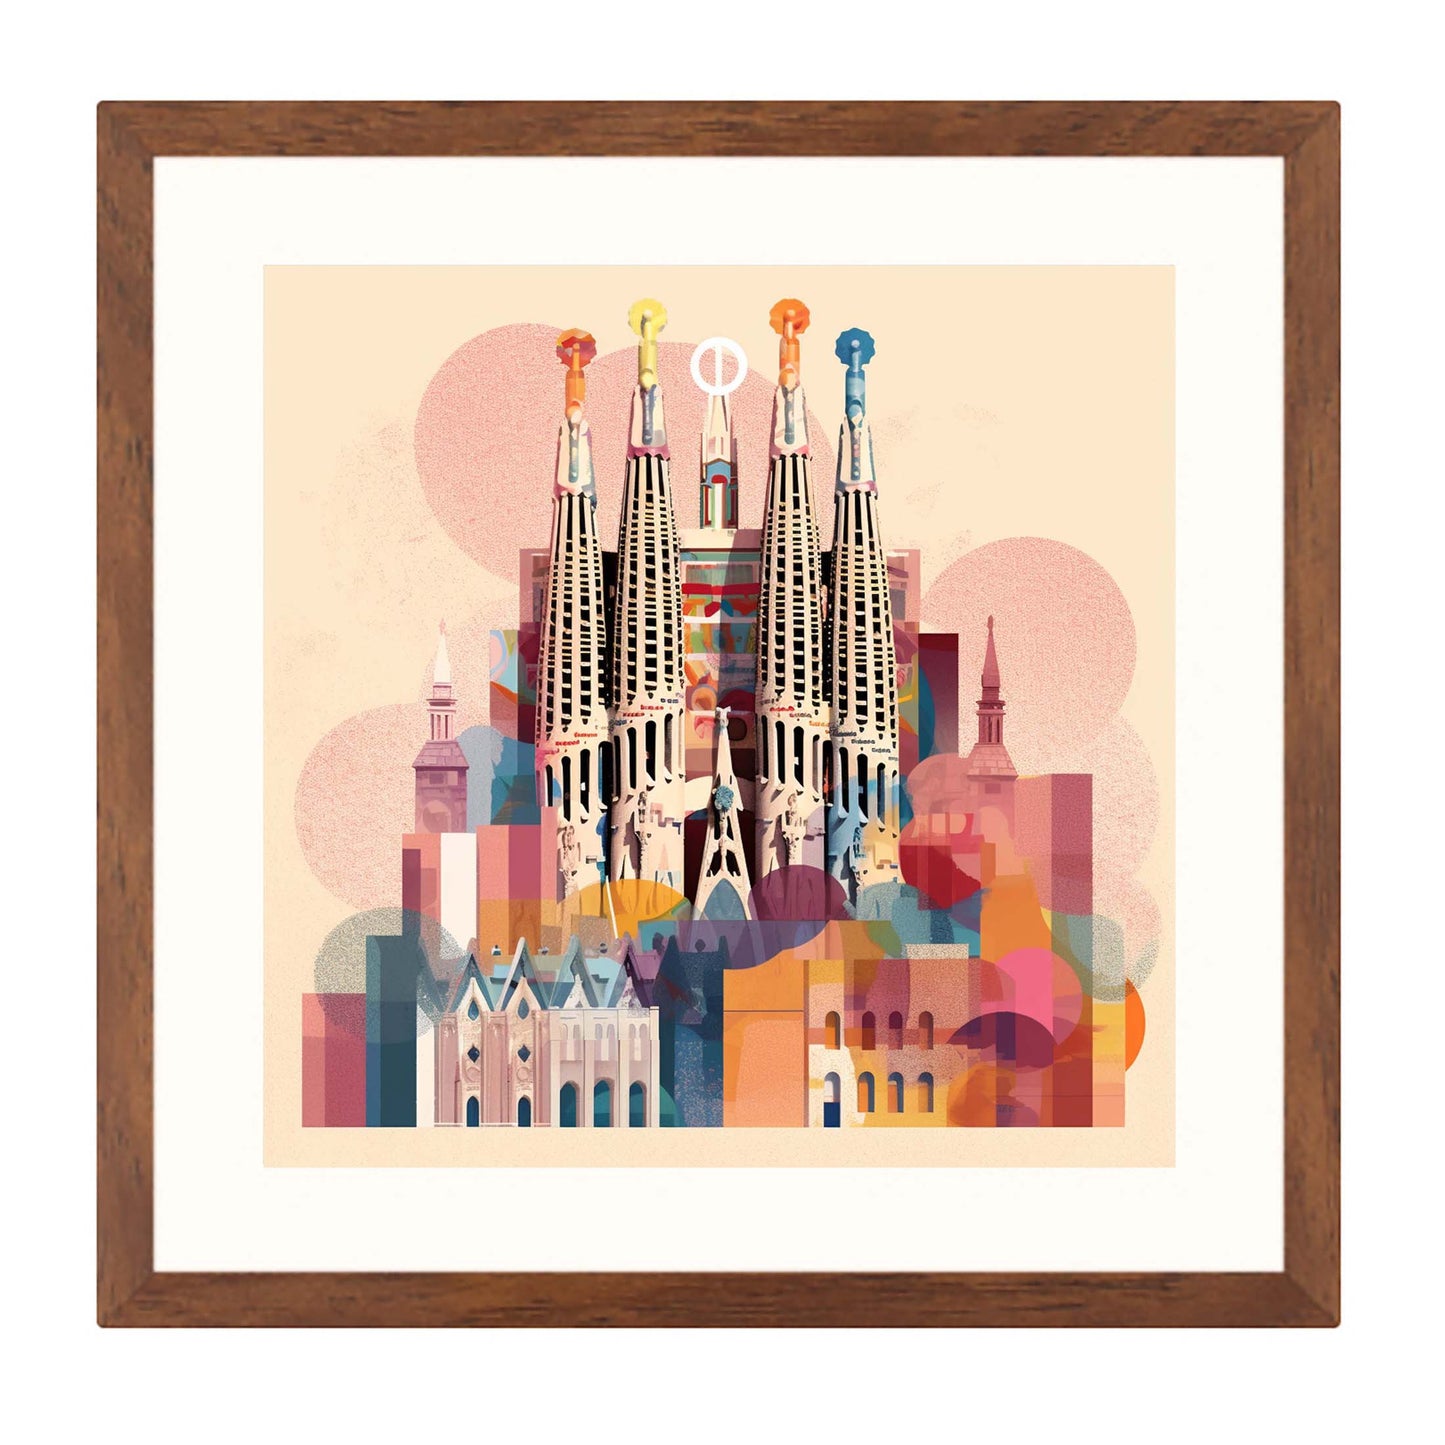 Barcelone Sagrada Familia - peinture murale dans le style du minimalisme